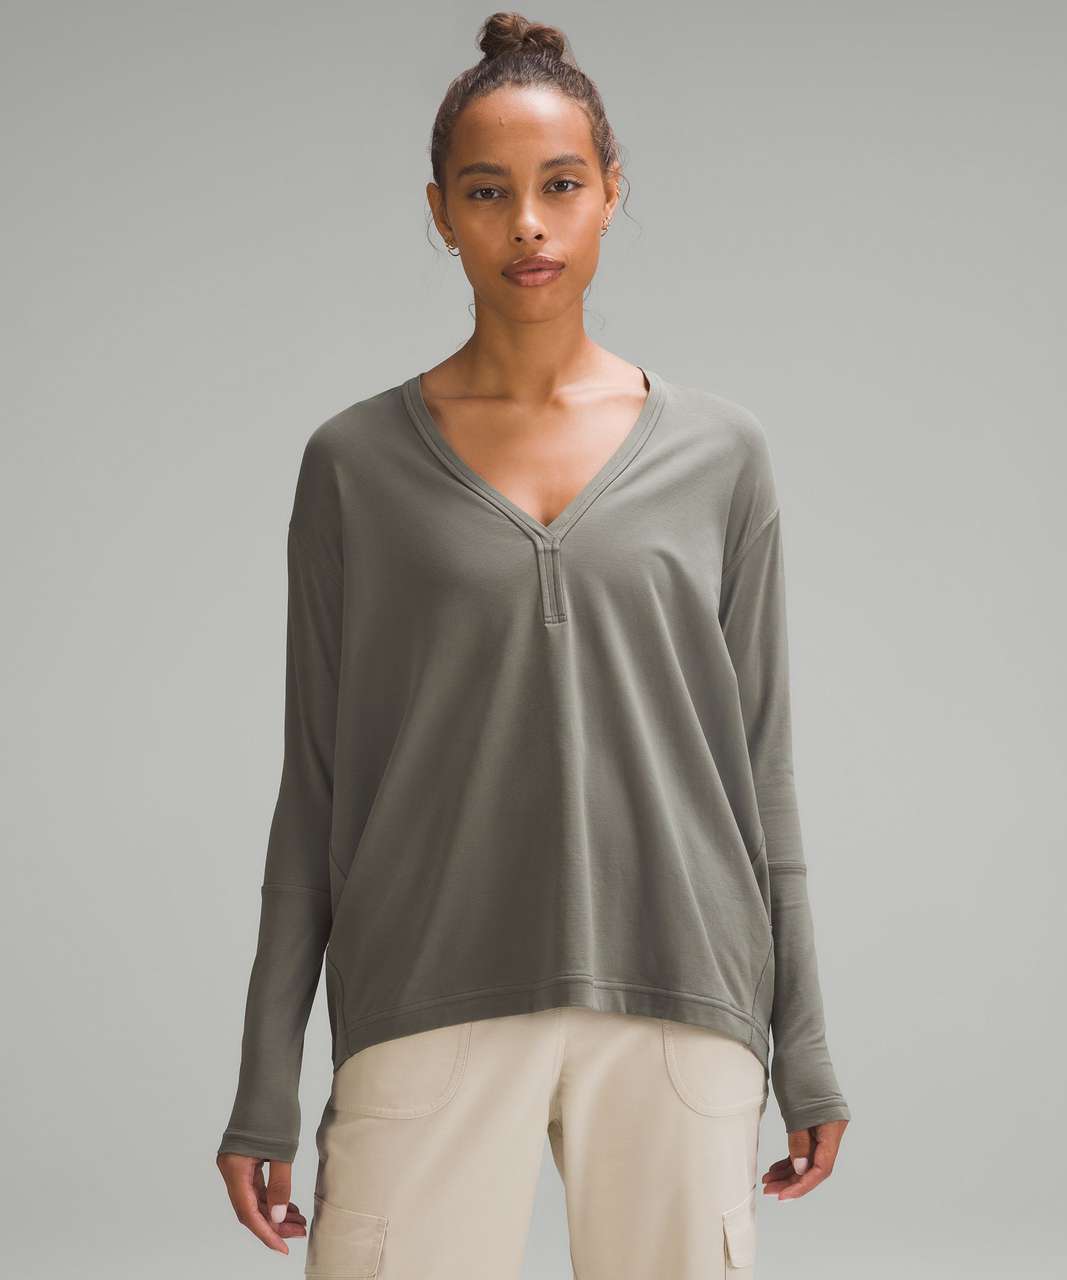 Lululemon Womens Shirt Long Sleeve Scoop Neck Top Striped Gray